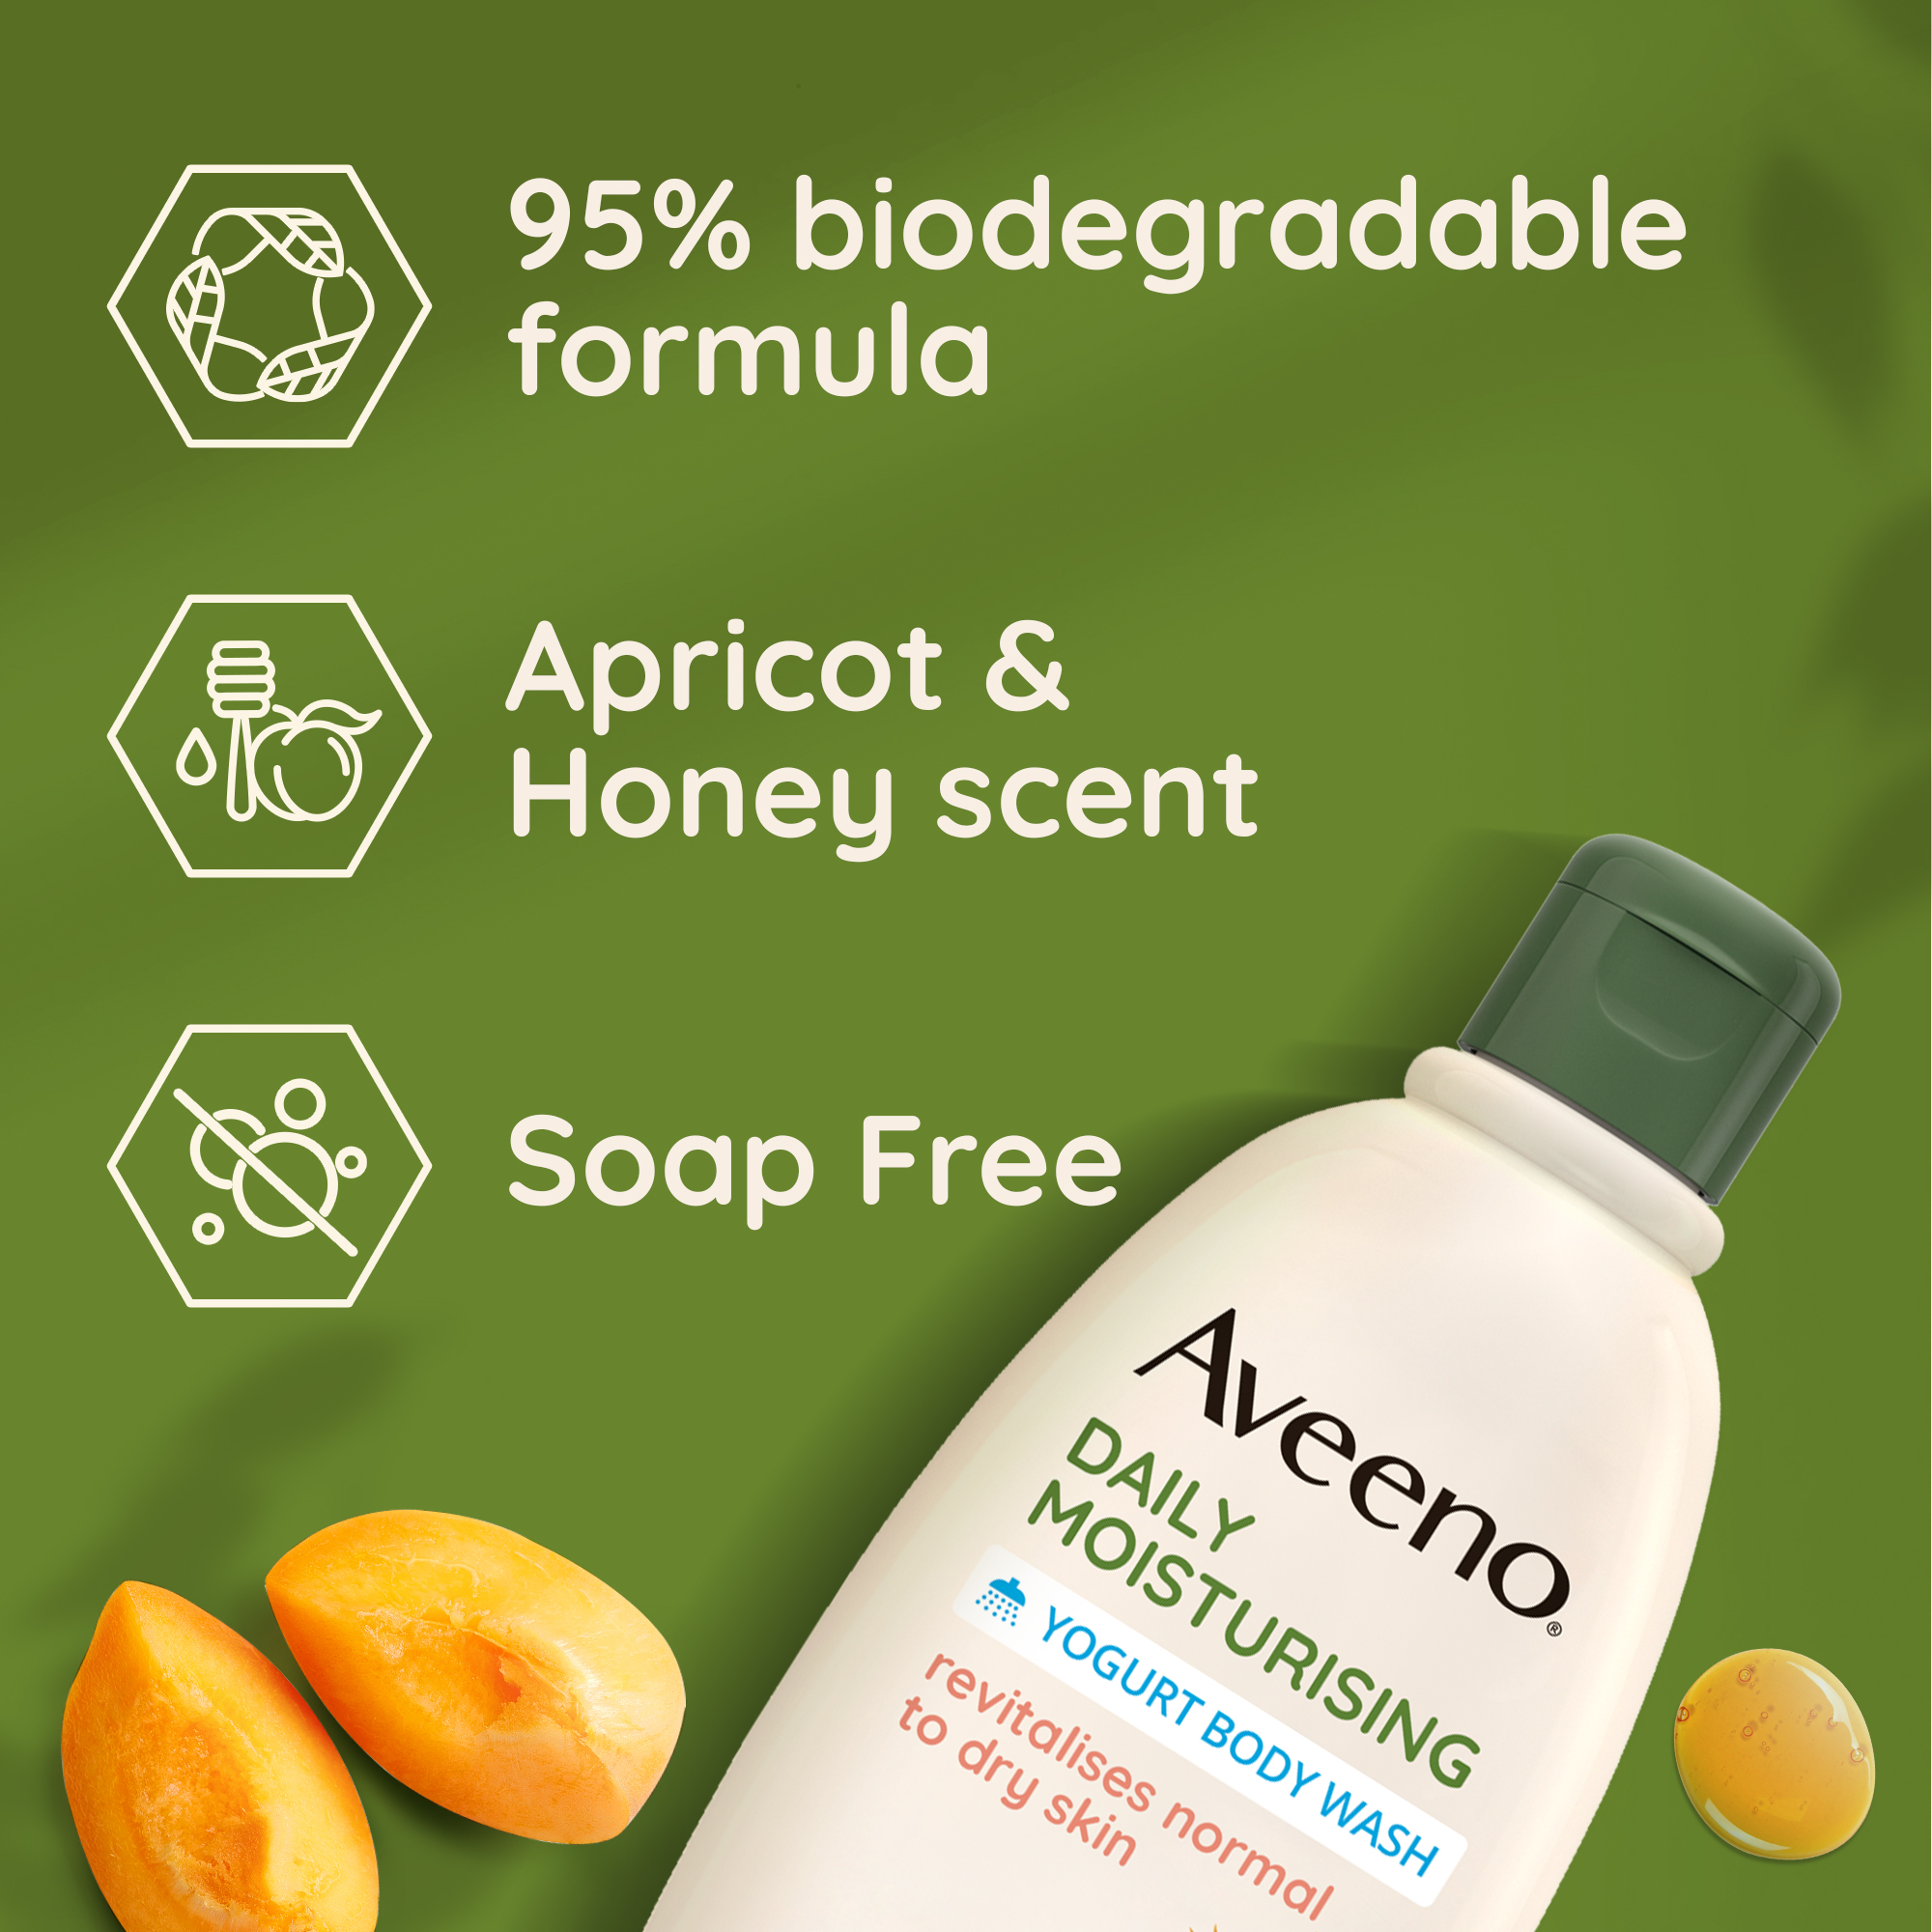 95% biodegradable formula, apricot & honey scent soap free